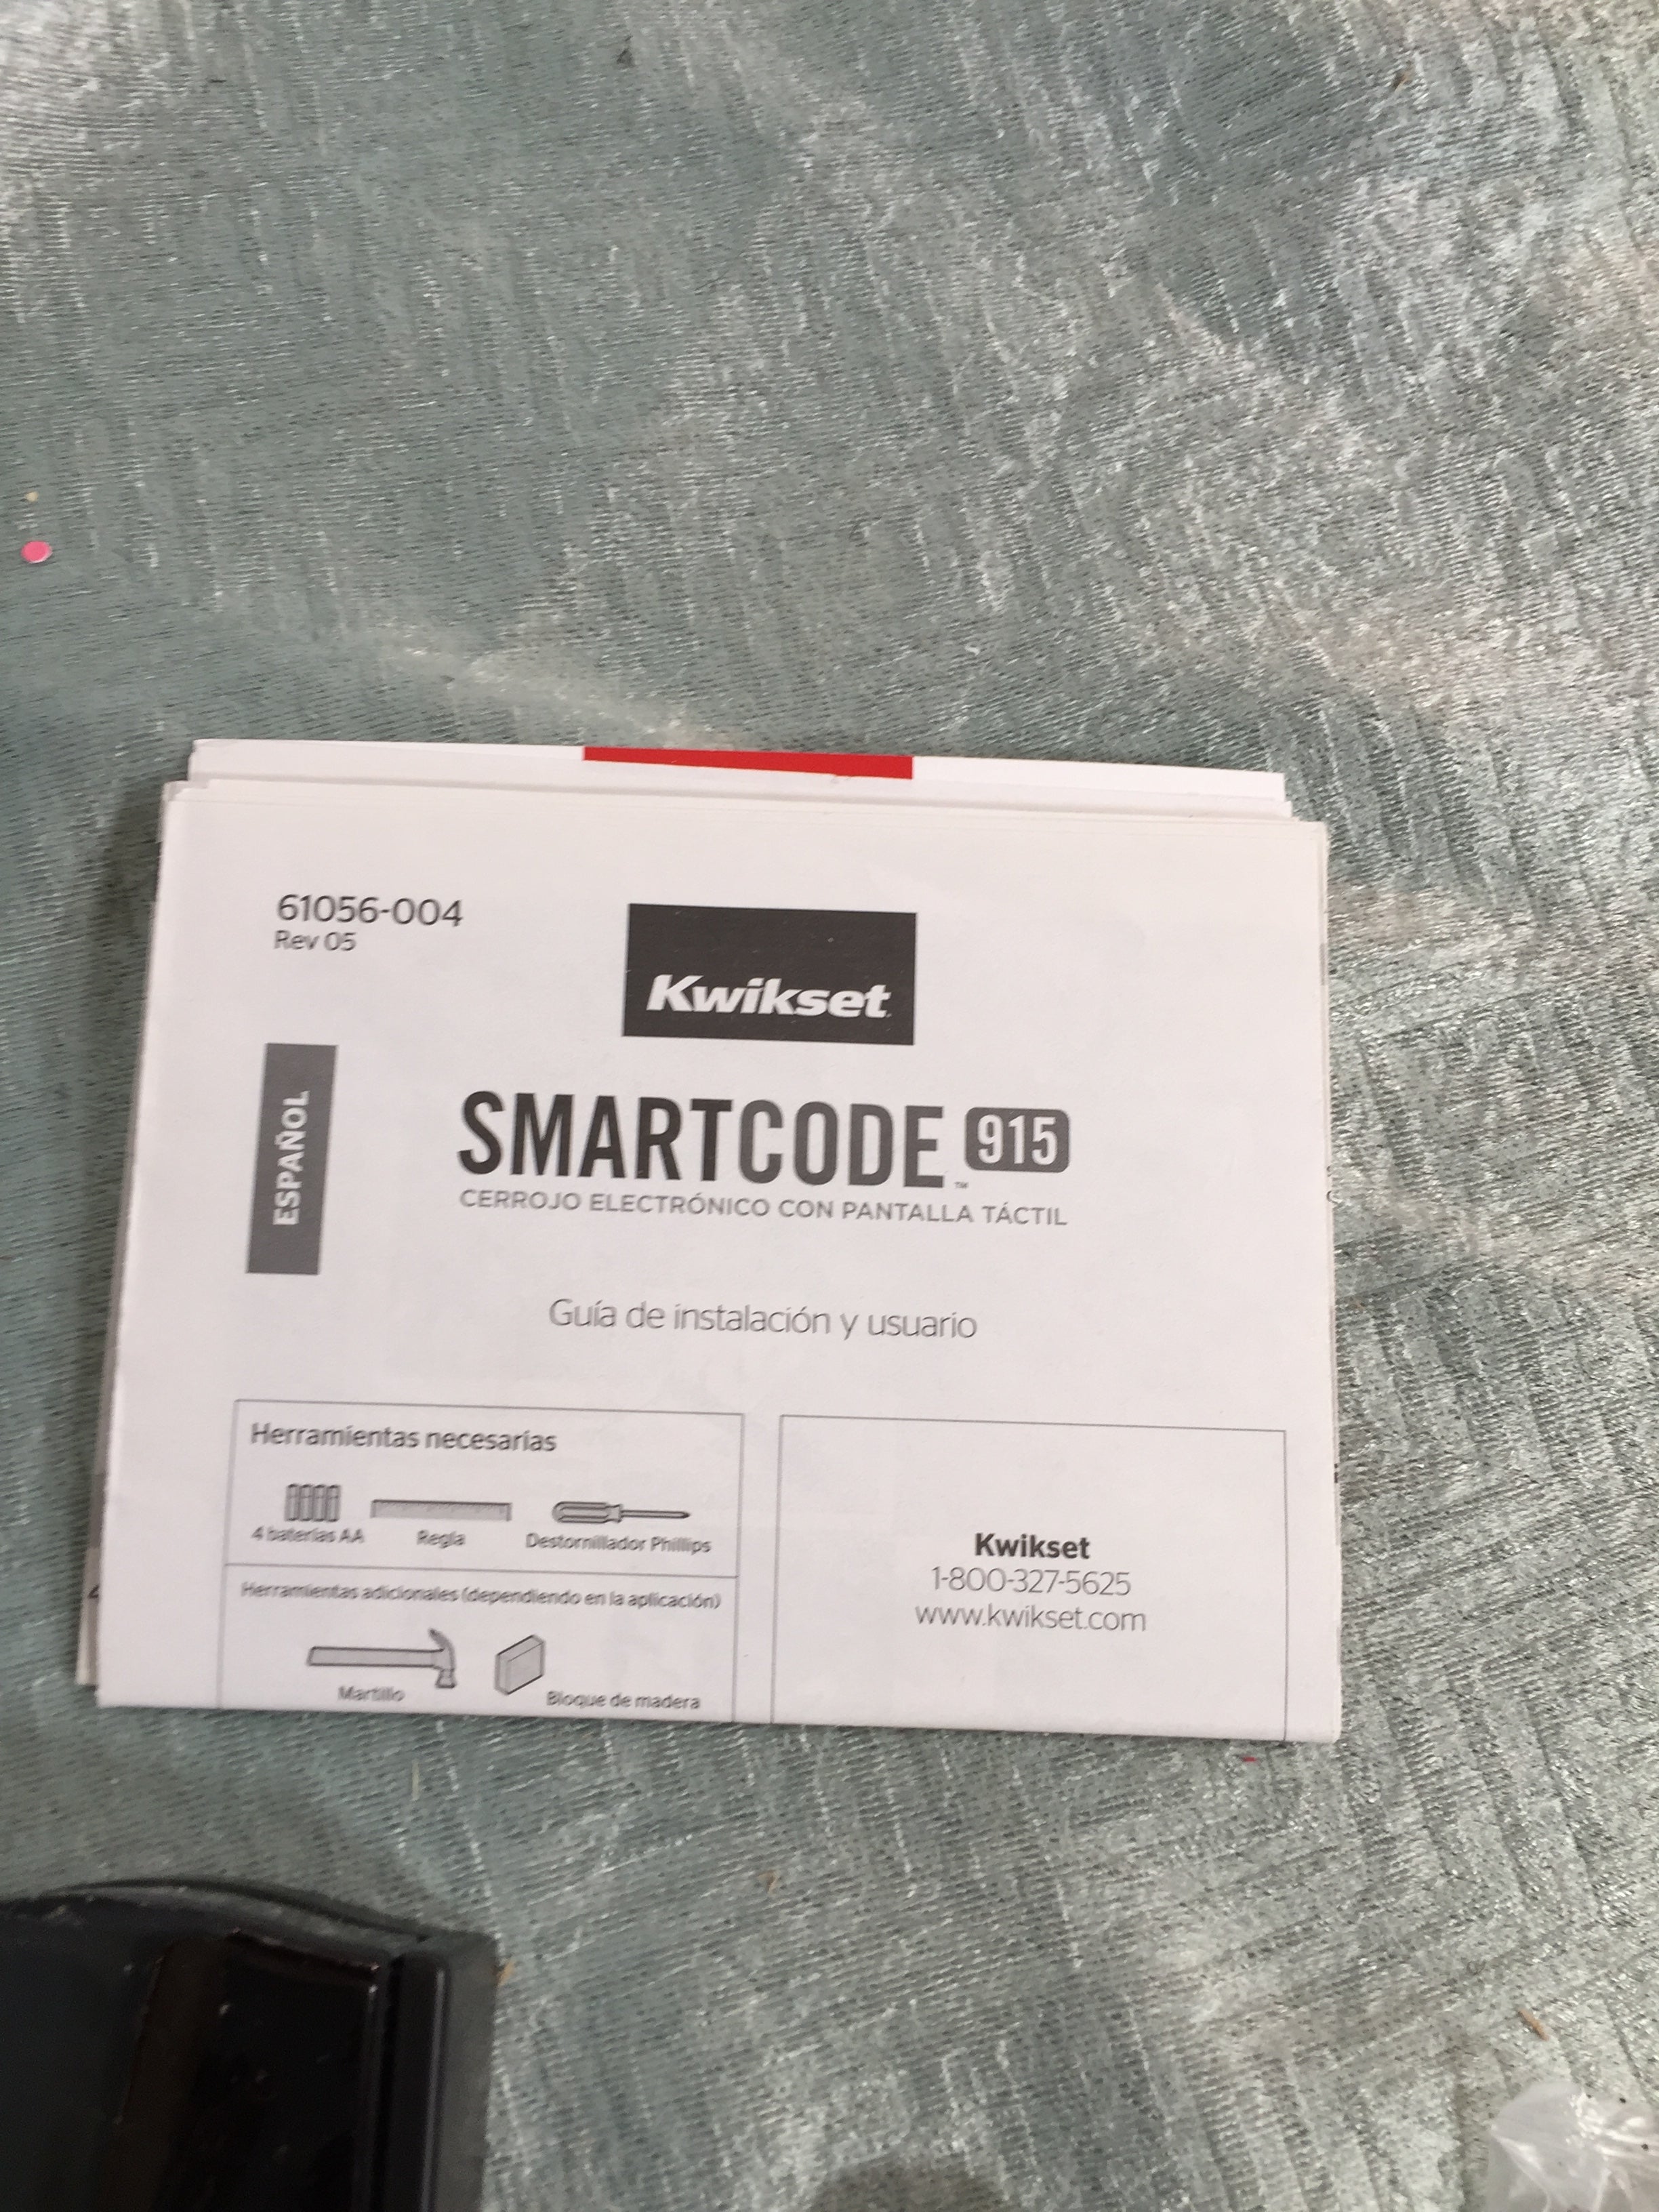 Kwikset 99150-003 SmartCode 915 Touchscreen Electronic UL Deadbolt with Key (7624437858542)